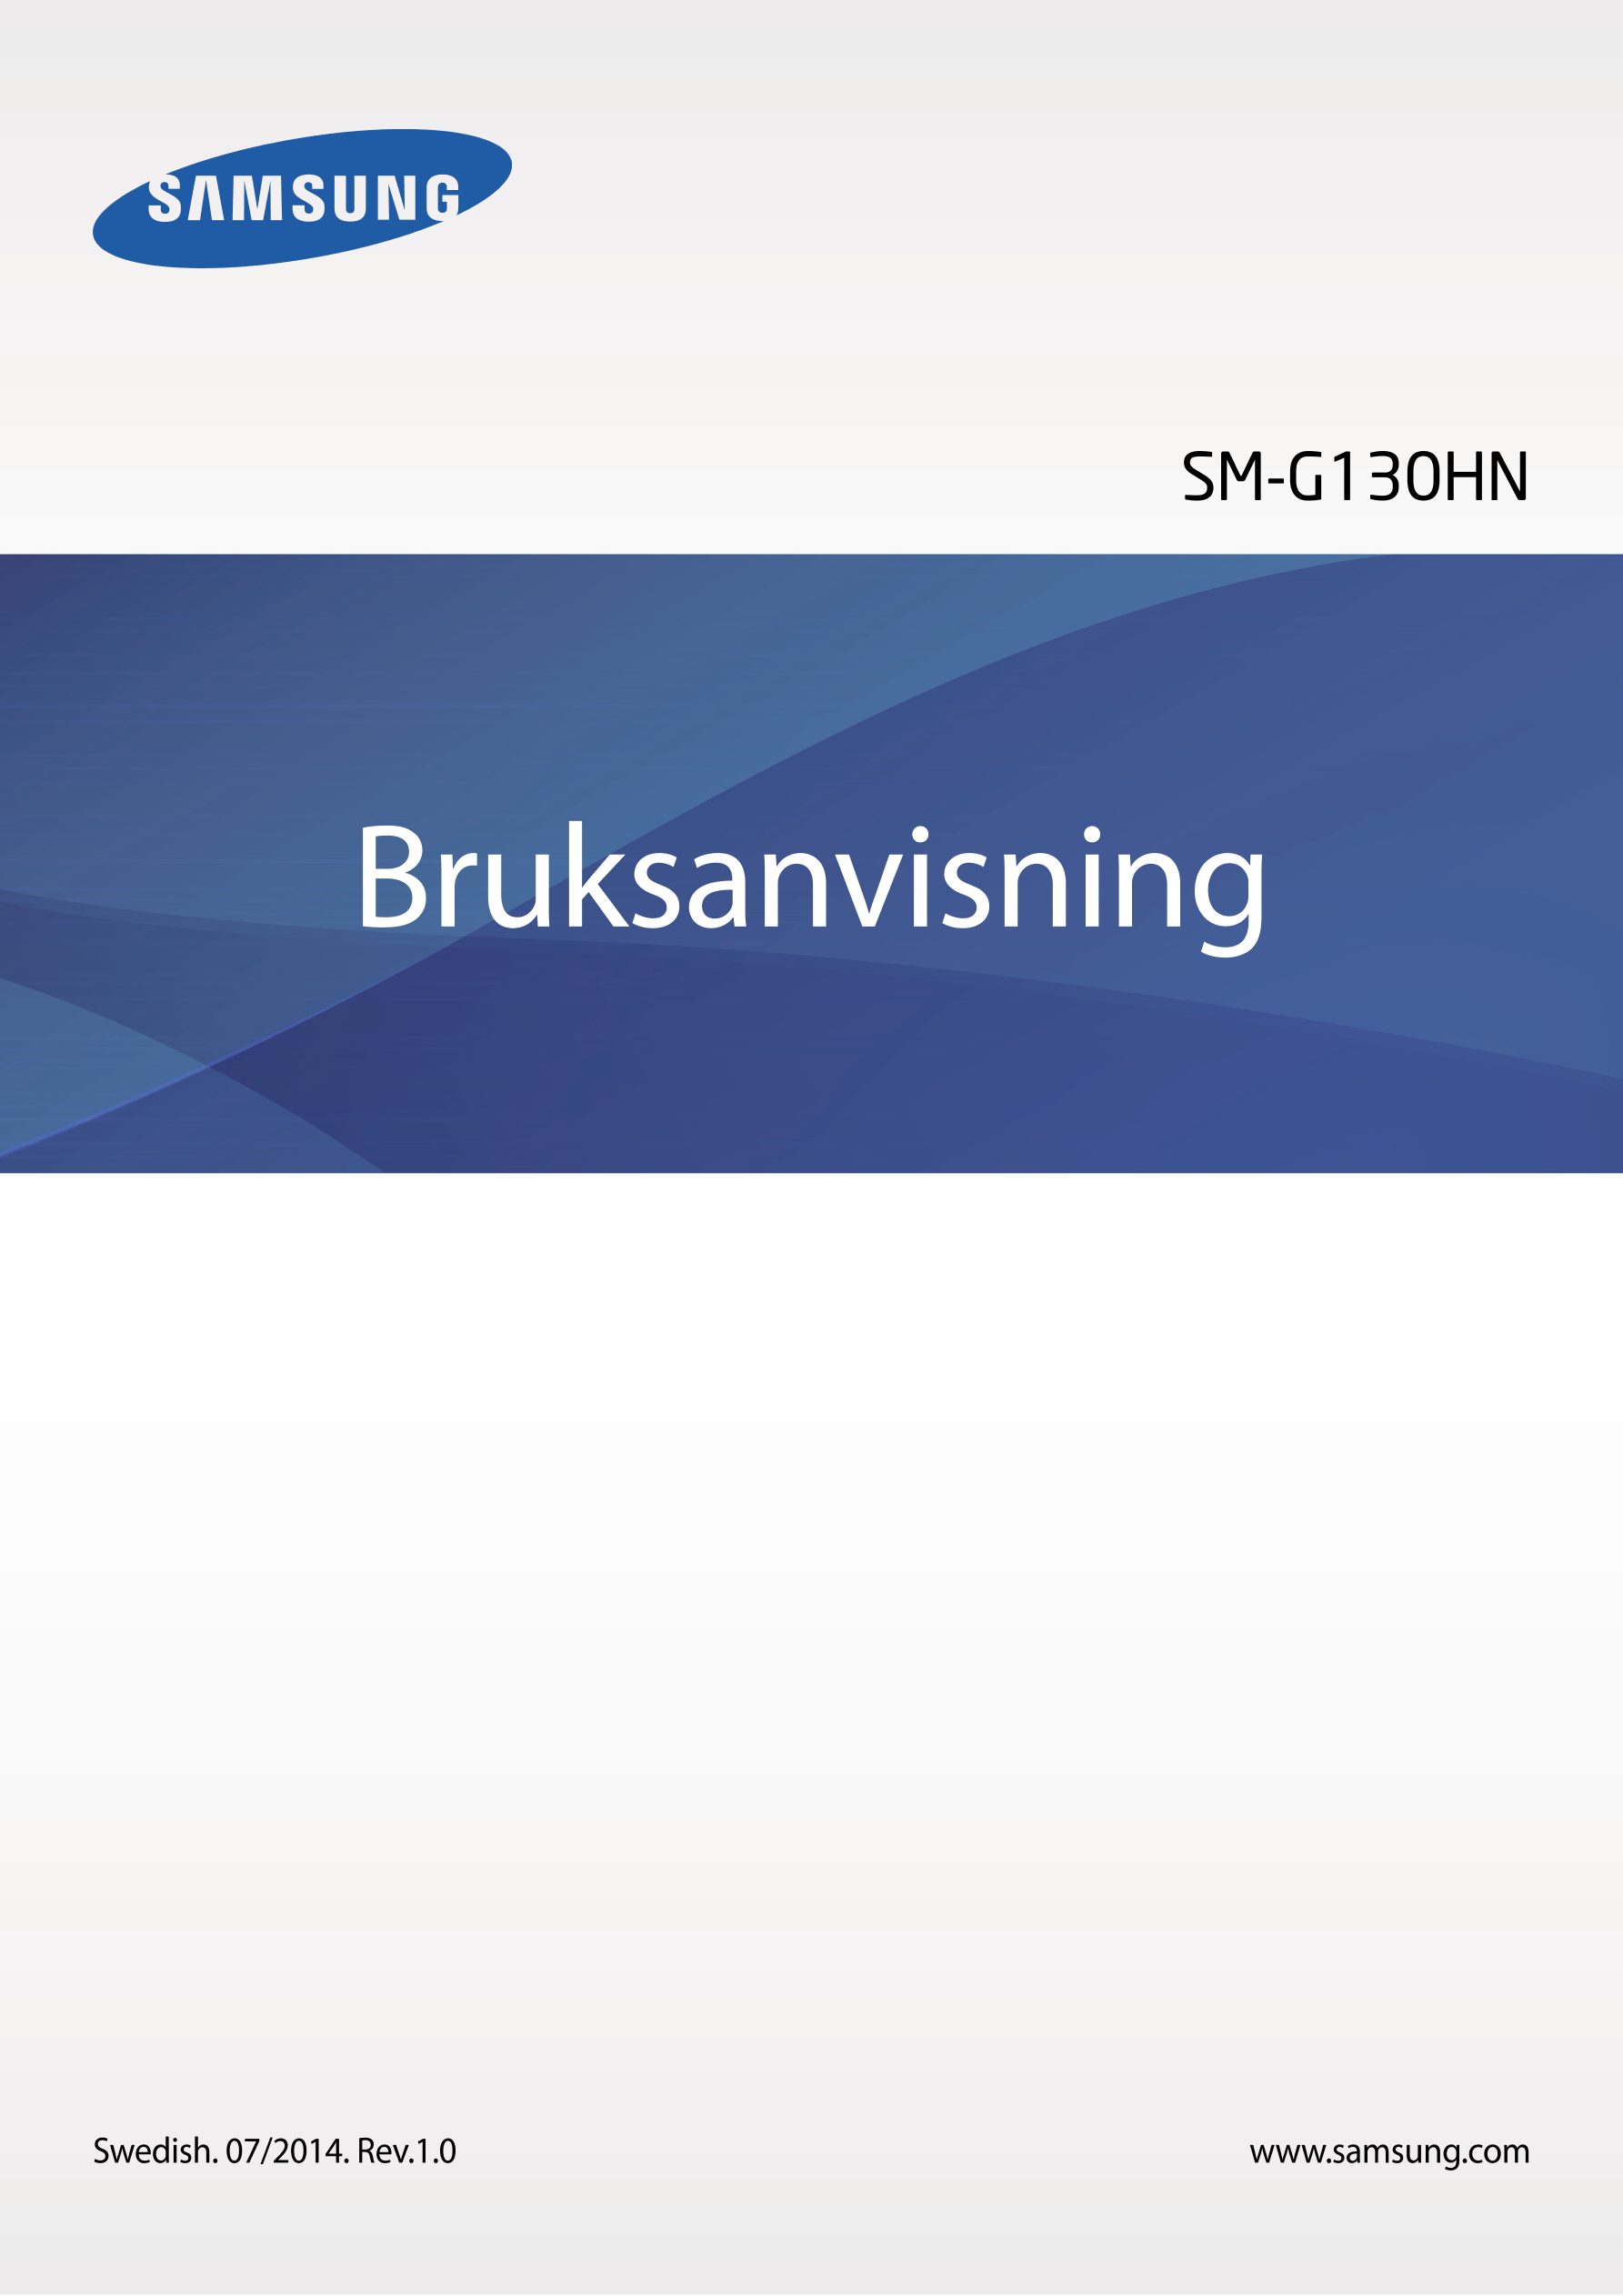 SM-G130HN
Bruksanvisning
Swedish. 07/2014. Rev.1.0 www.samsung.com